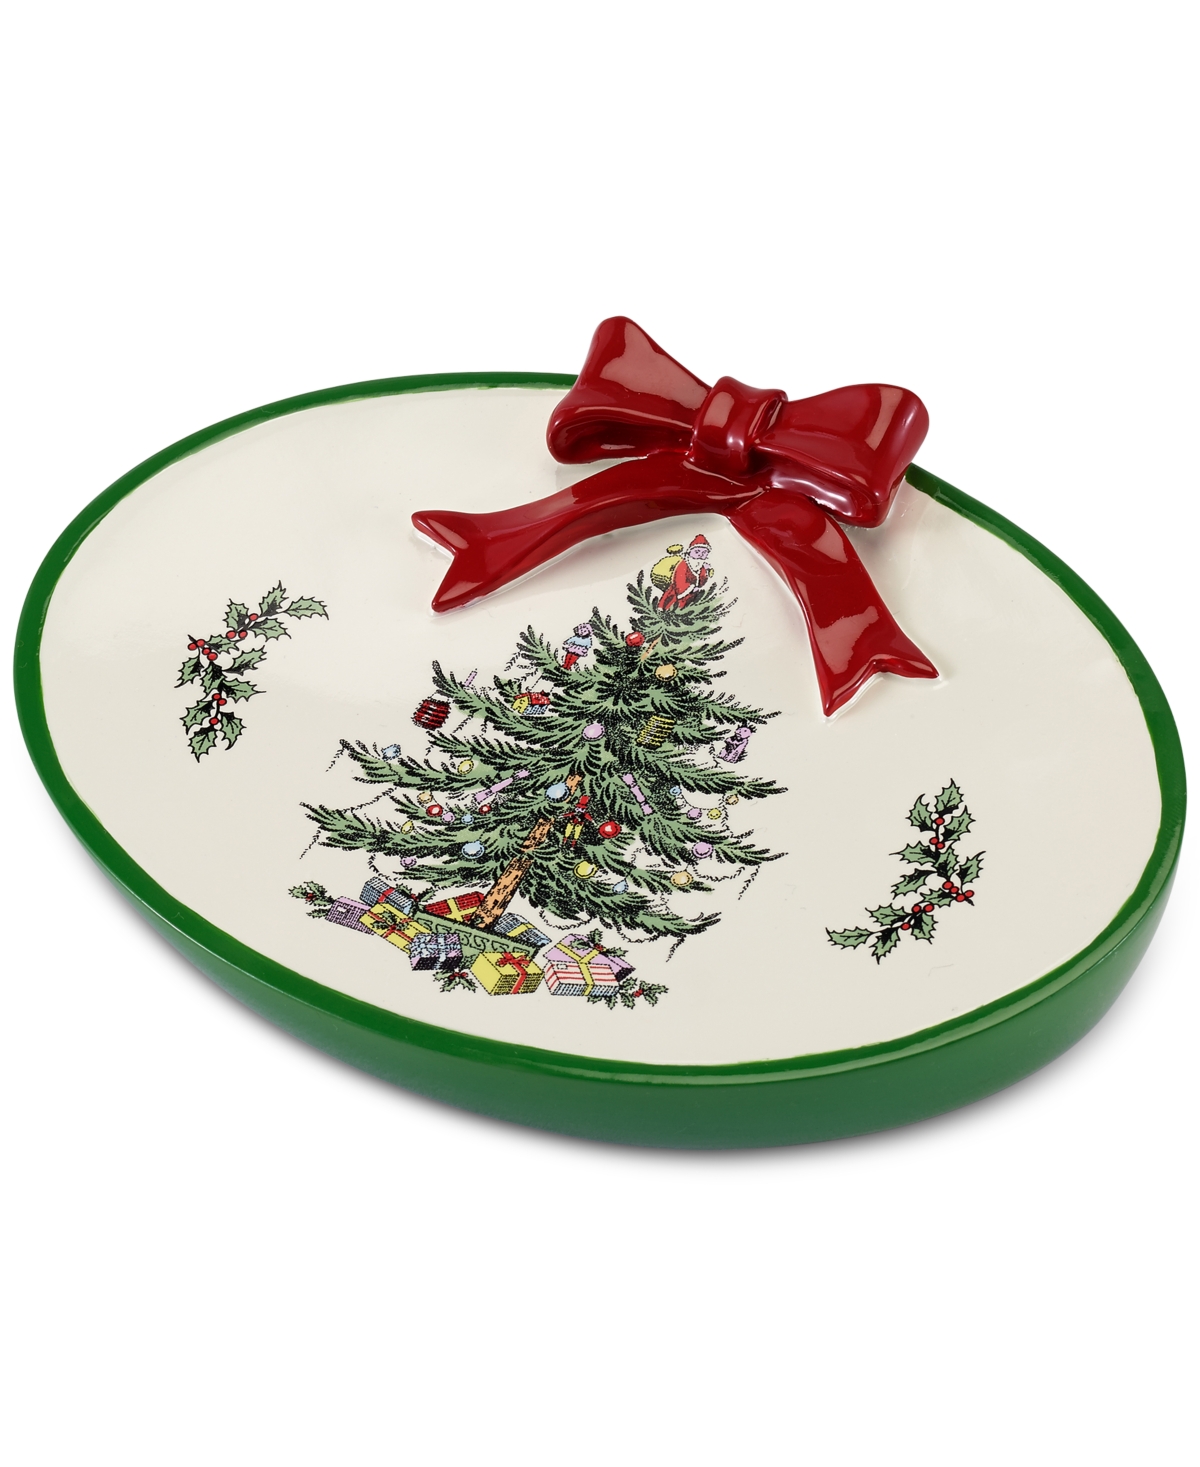 Spode Christmas Tree Soap Dish - Soap Dish